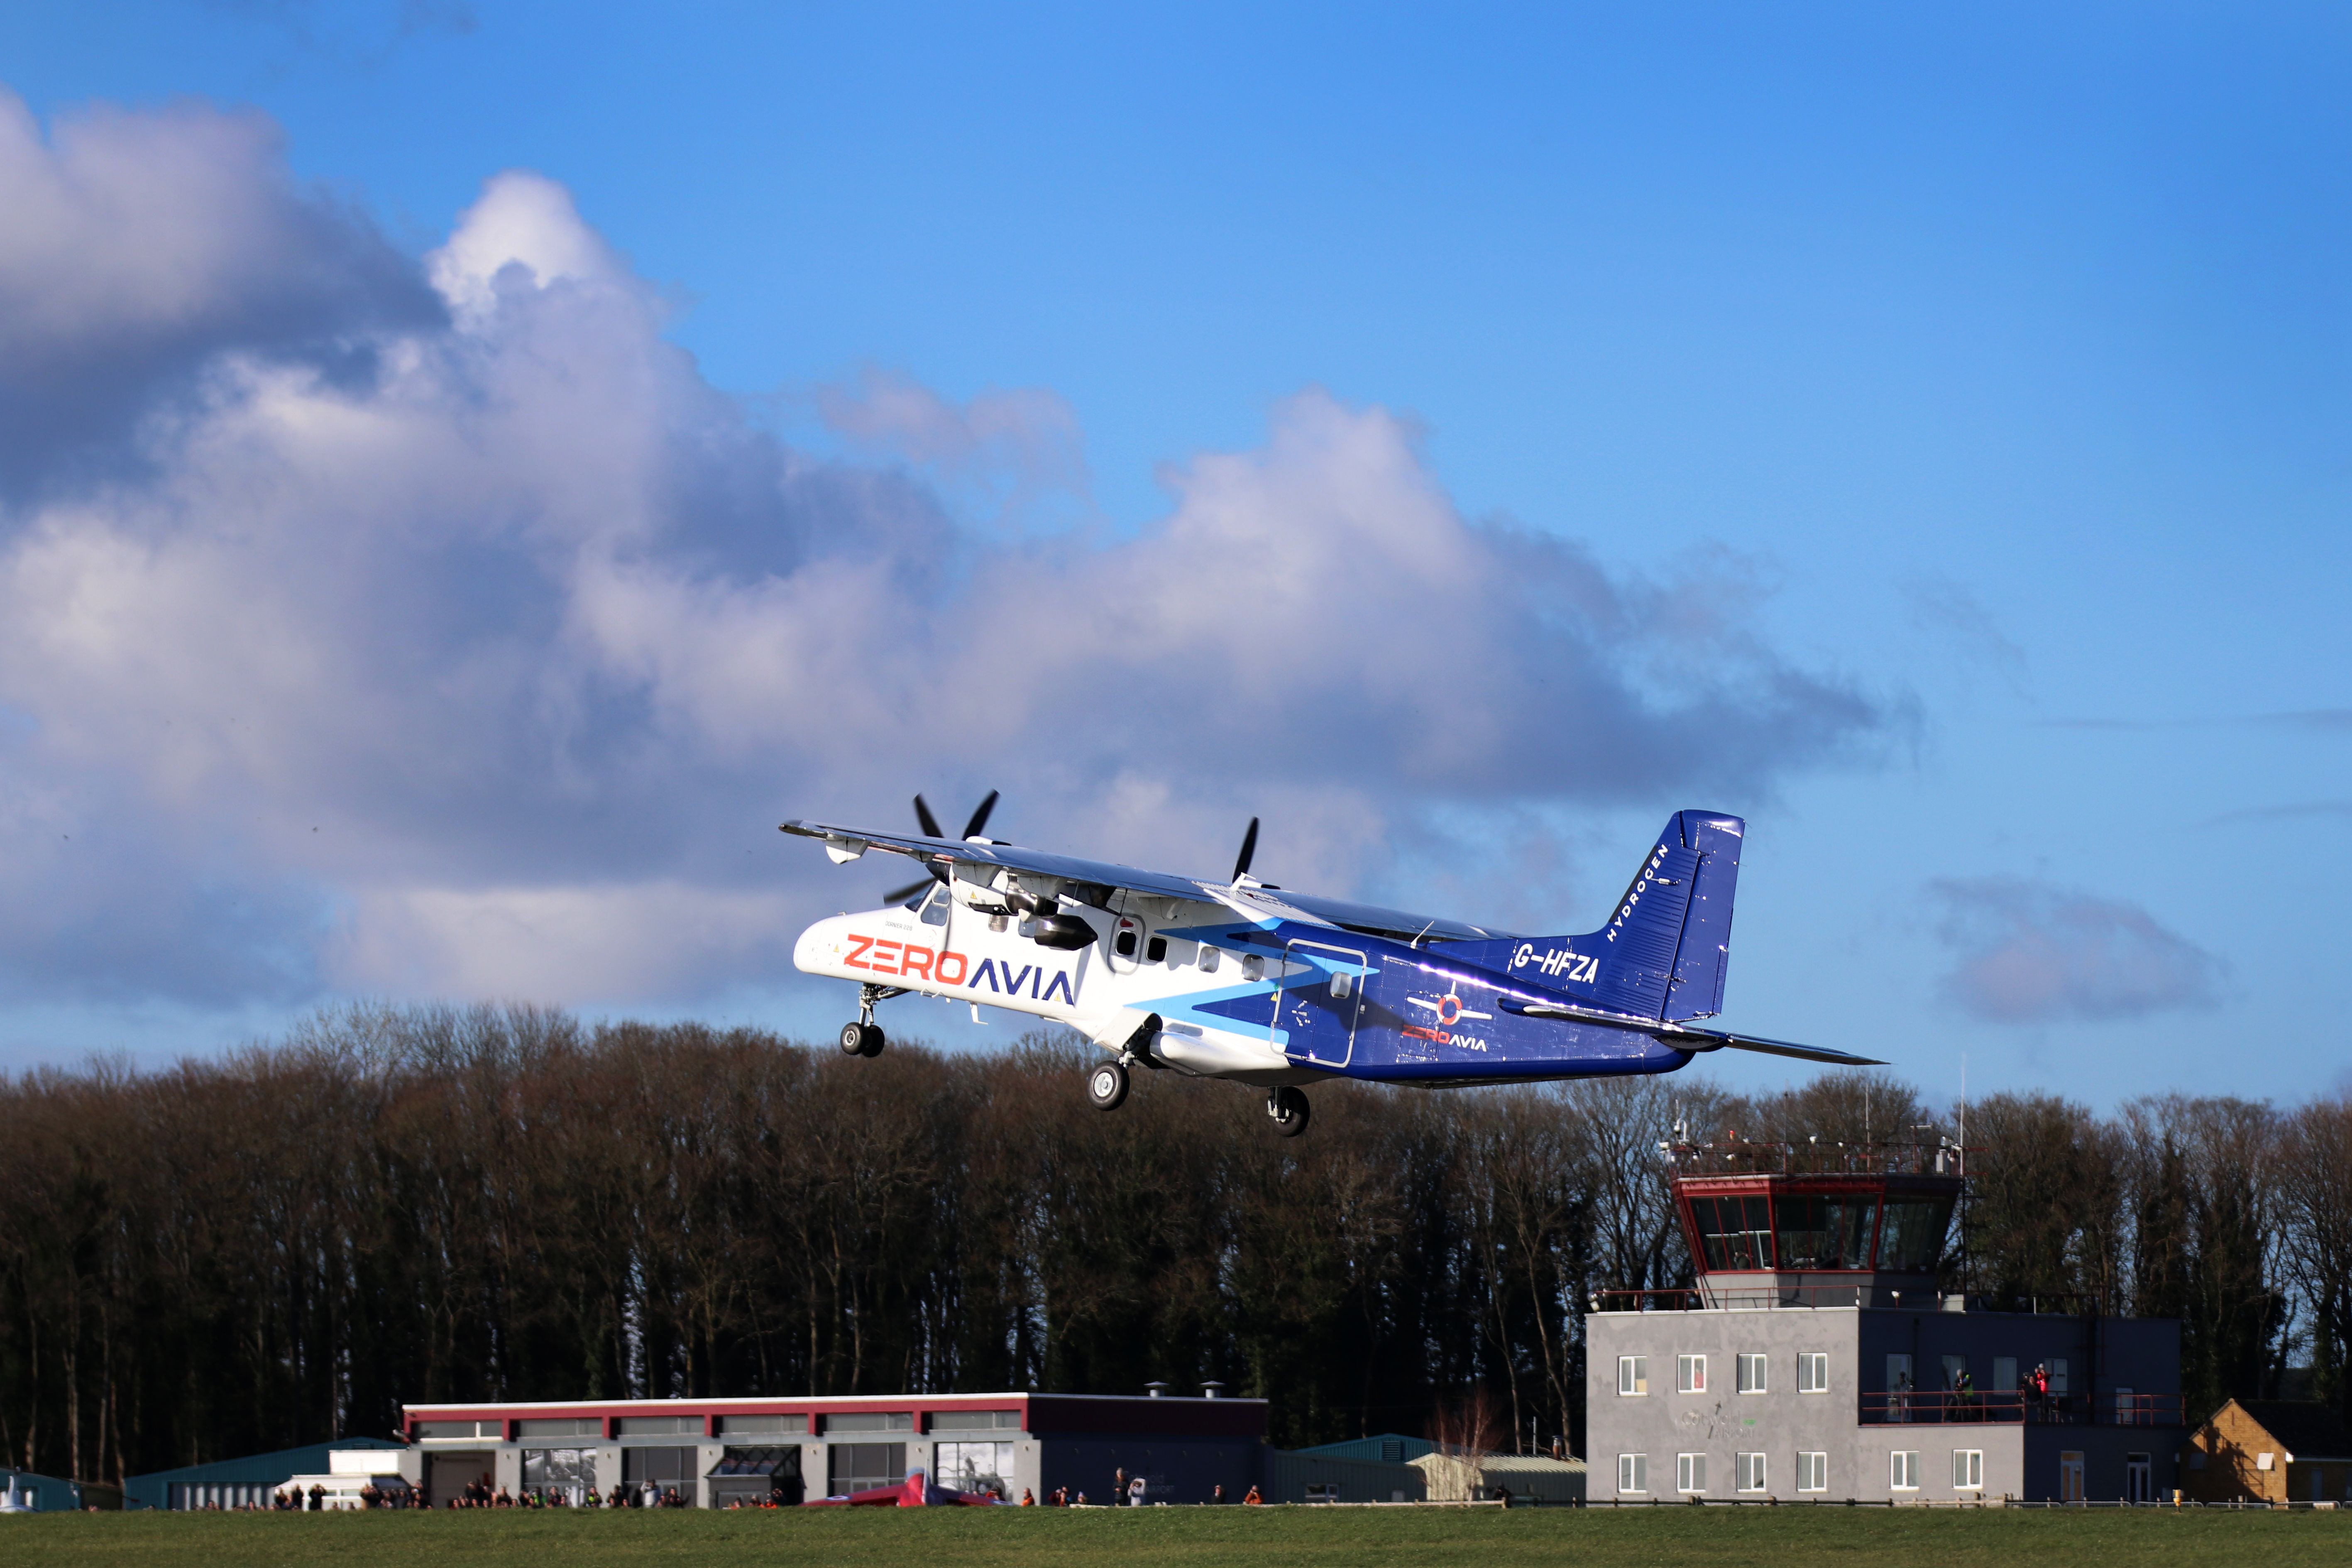 ZeroAvia first flight with Dornier 228 taking off